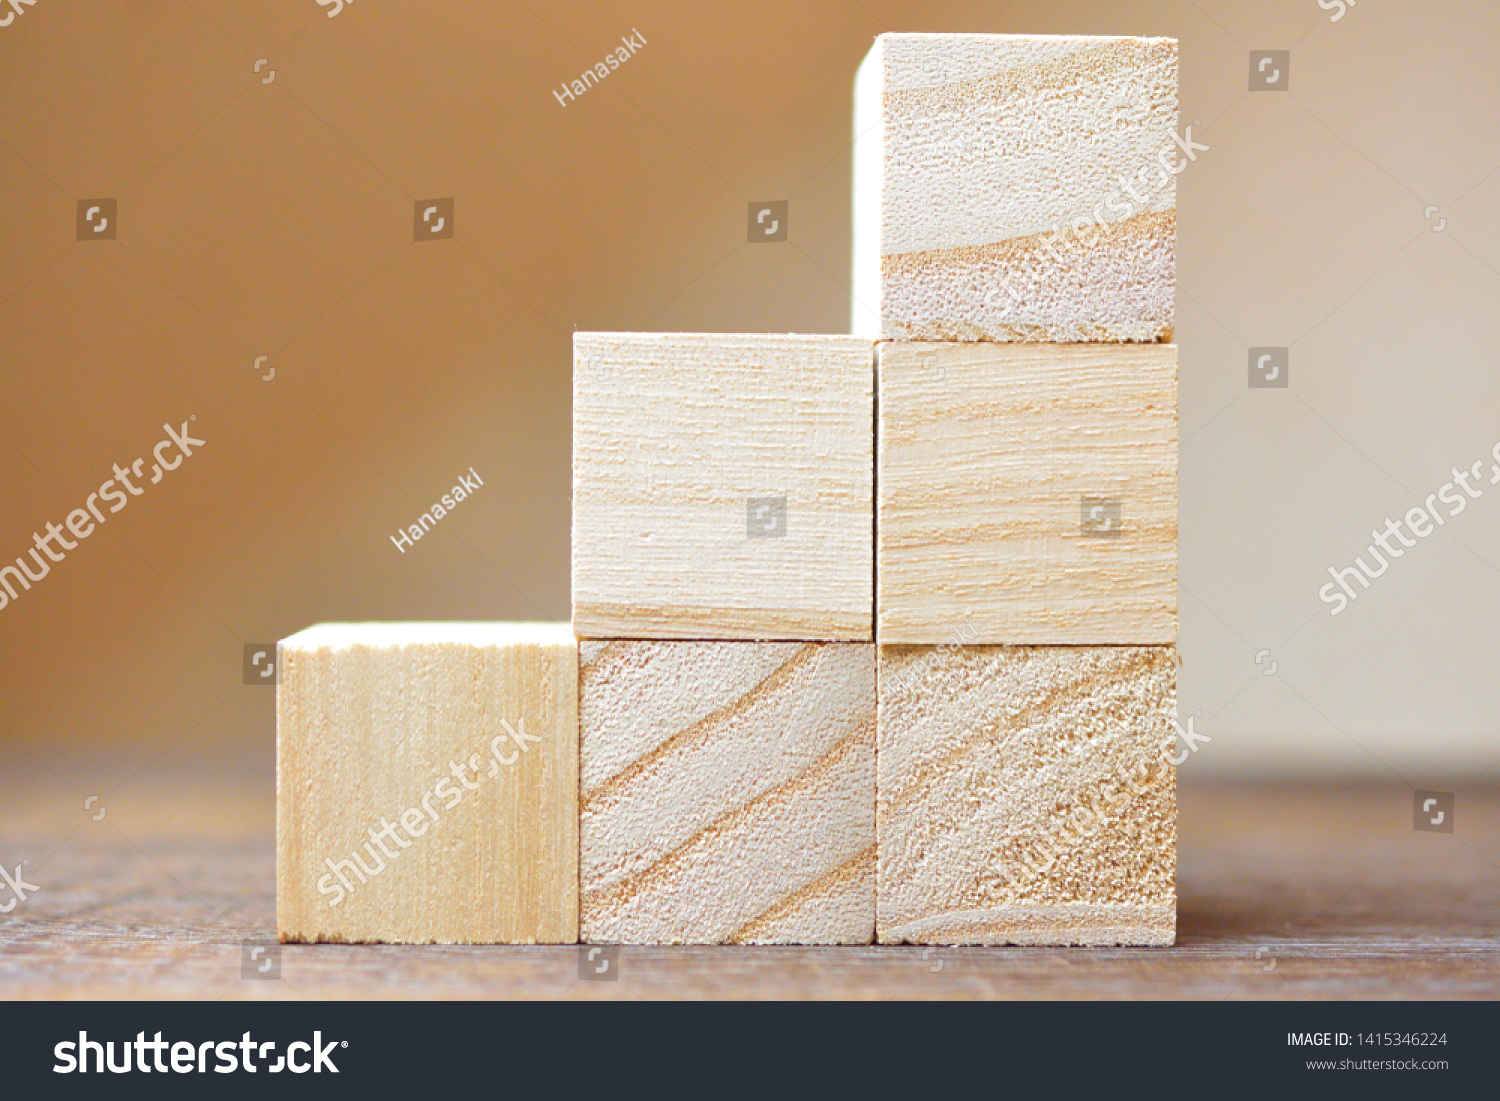 Square building blocks.
Stacked blocks. #1415346224